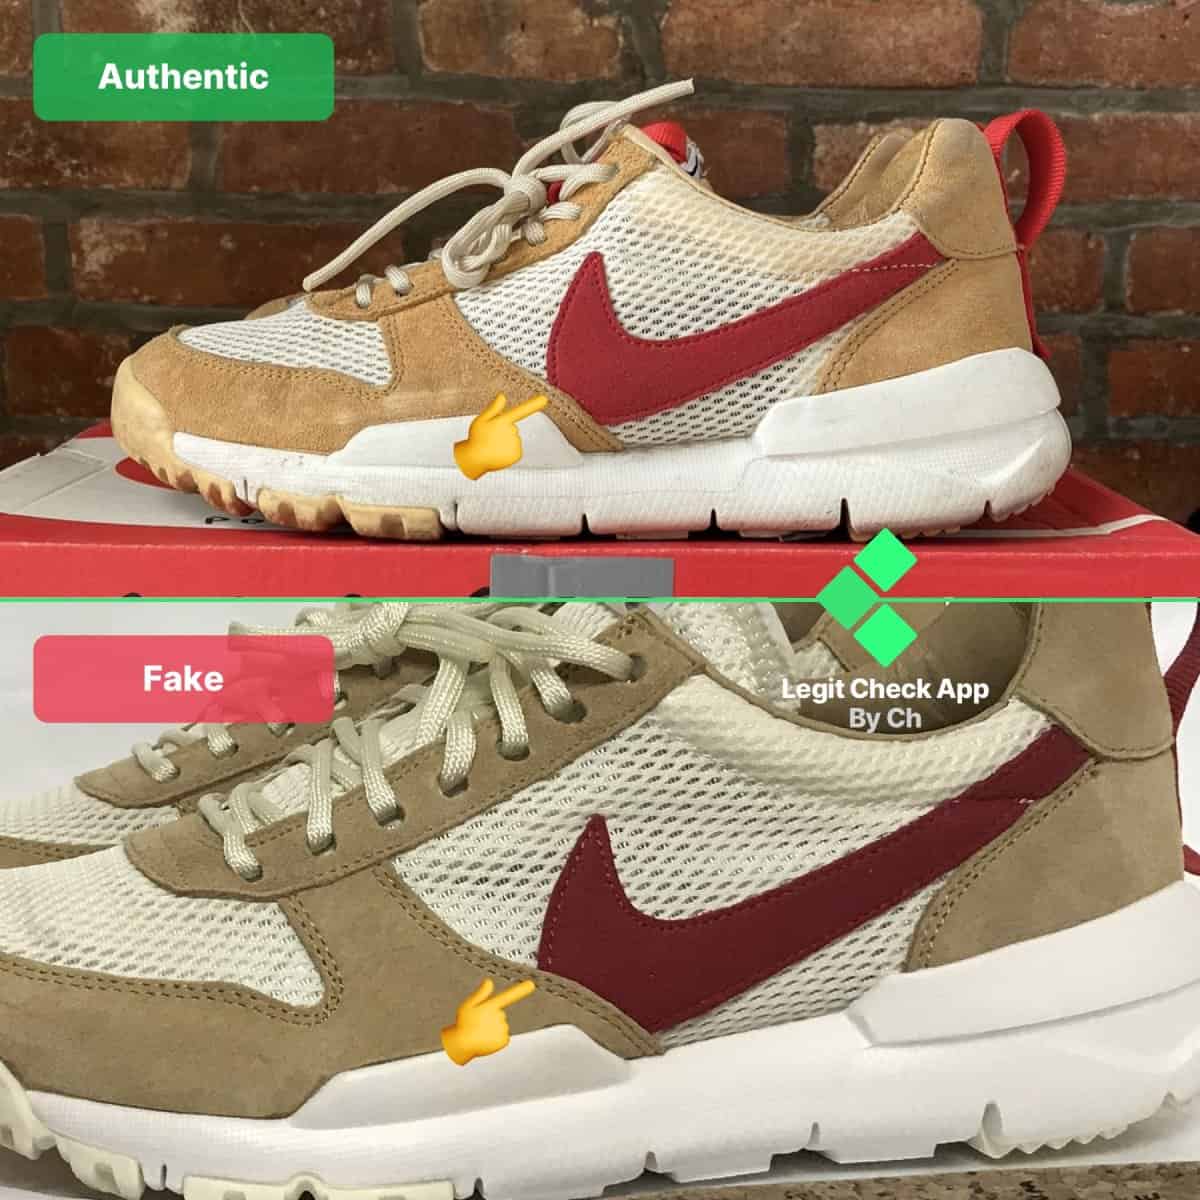 Nike Mars Yard fake vs real